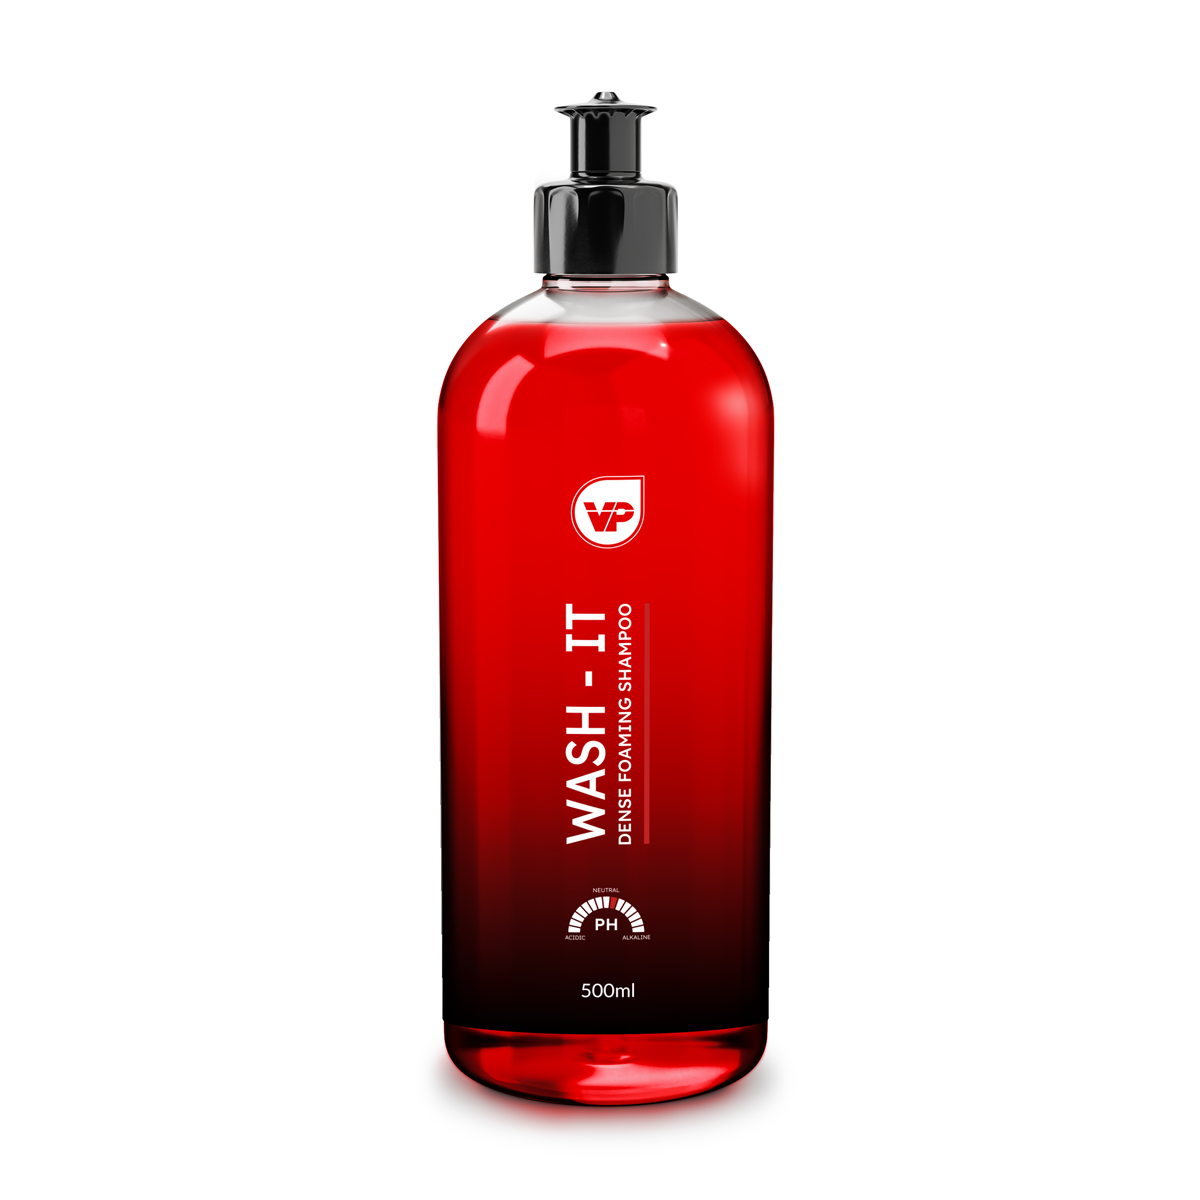 Wash-It-dense-foaming-car-shampoo-500ml-VP.png